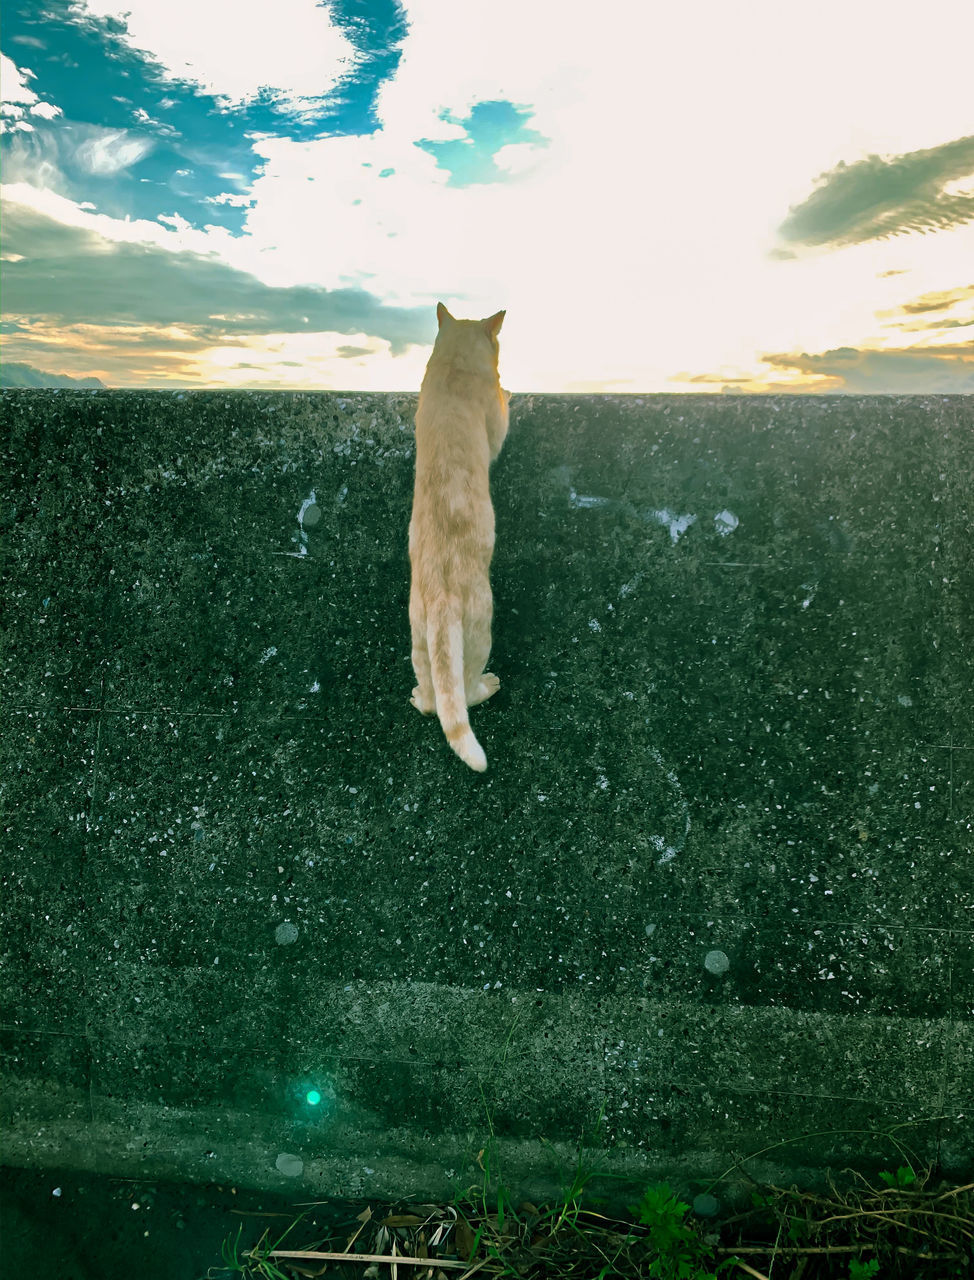 CAT LOOKING AWAY ON ROCK